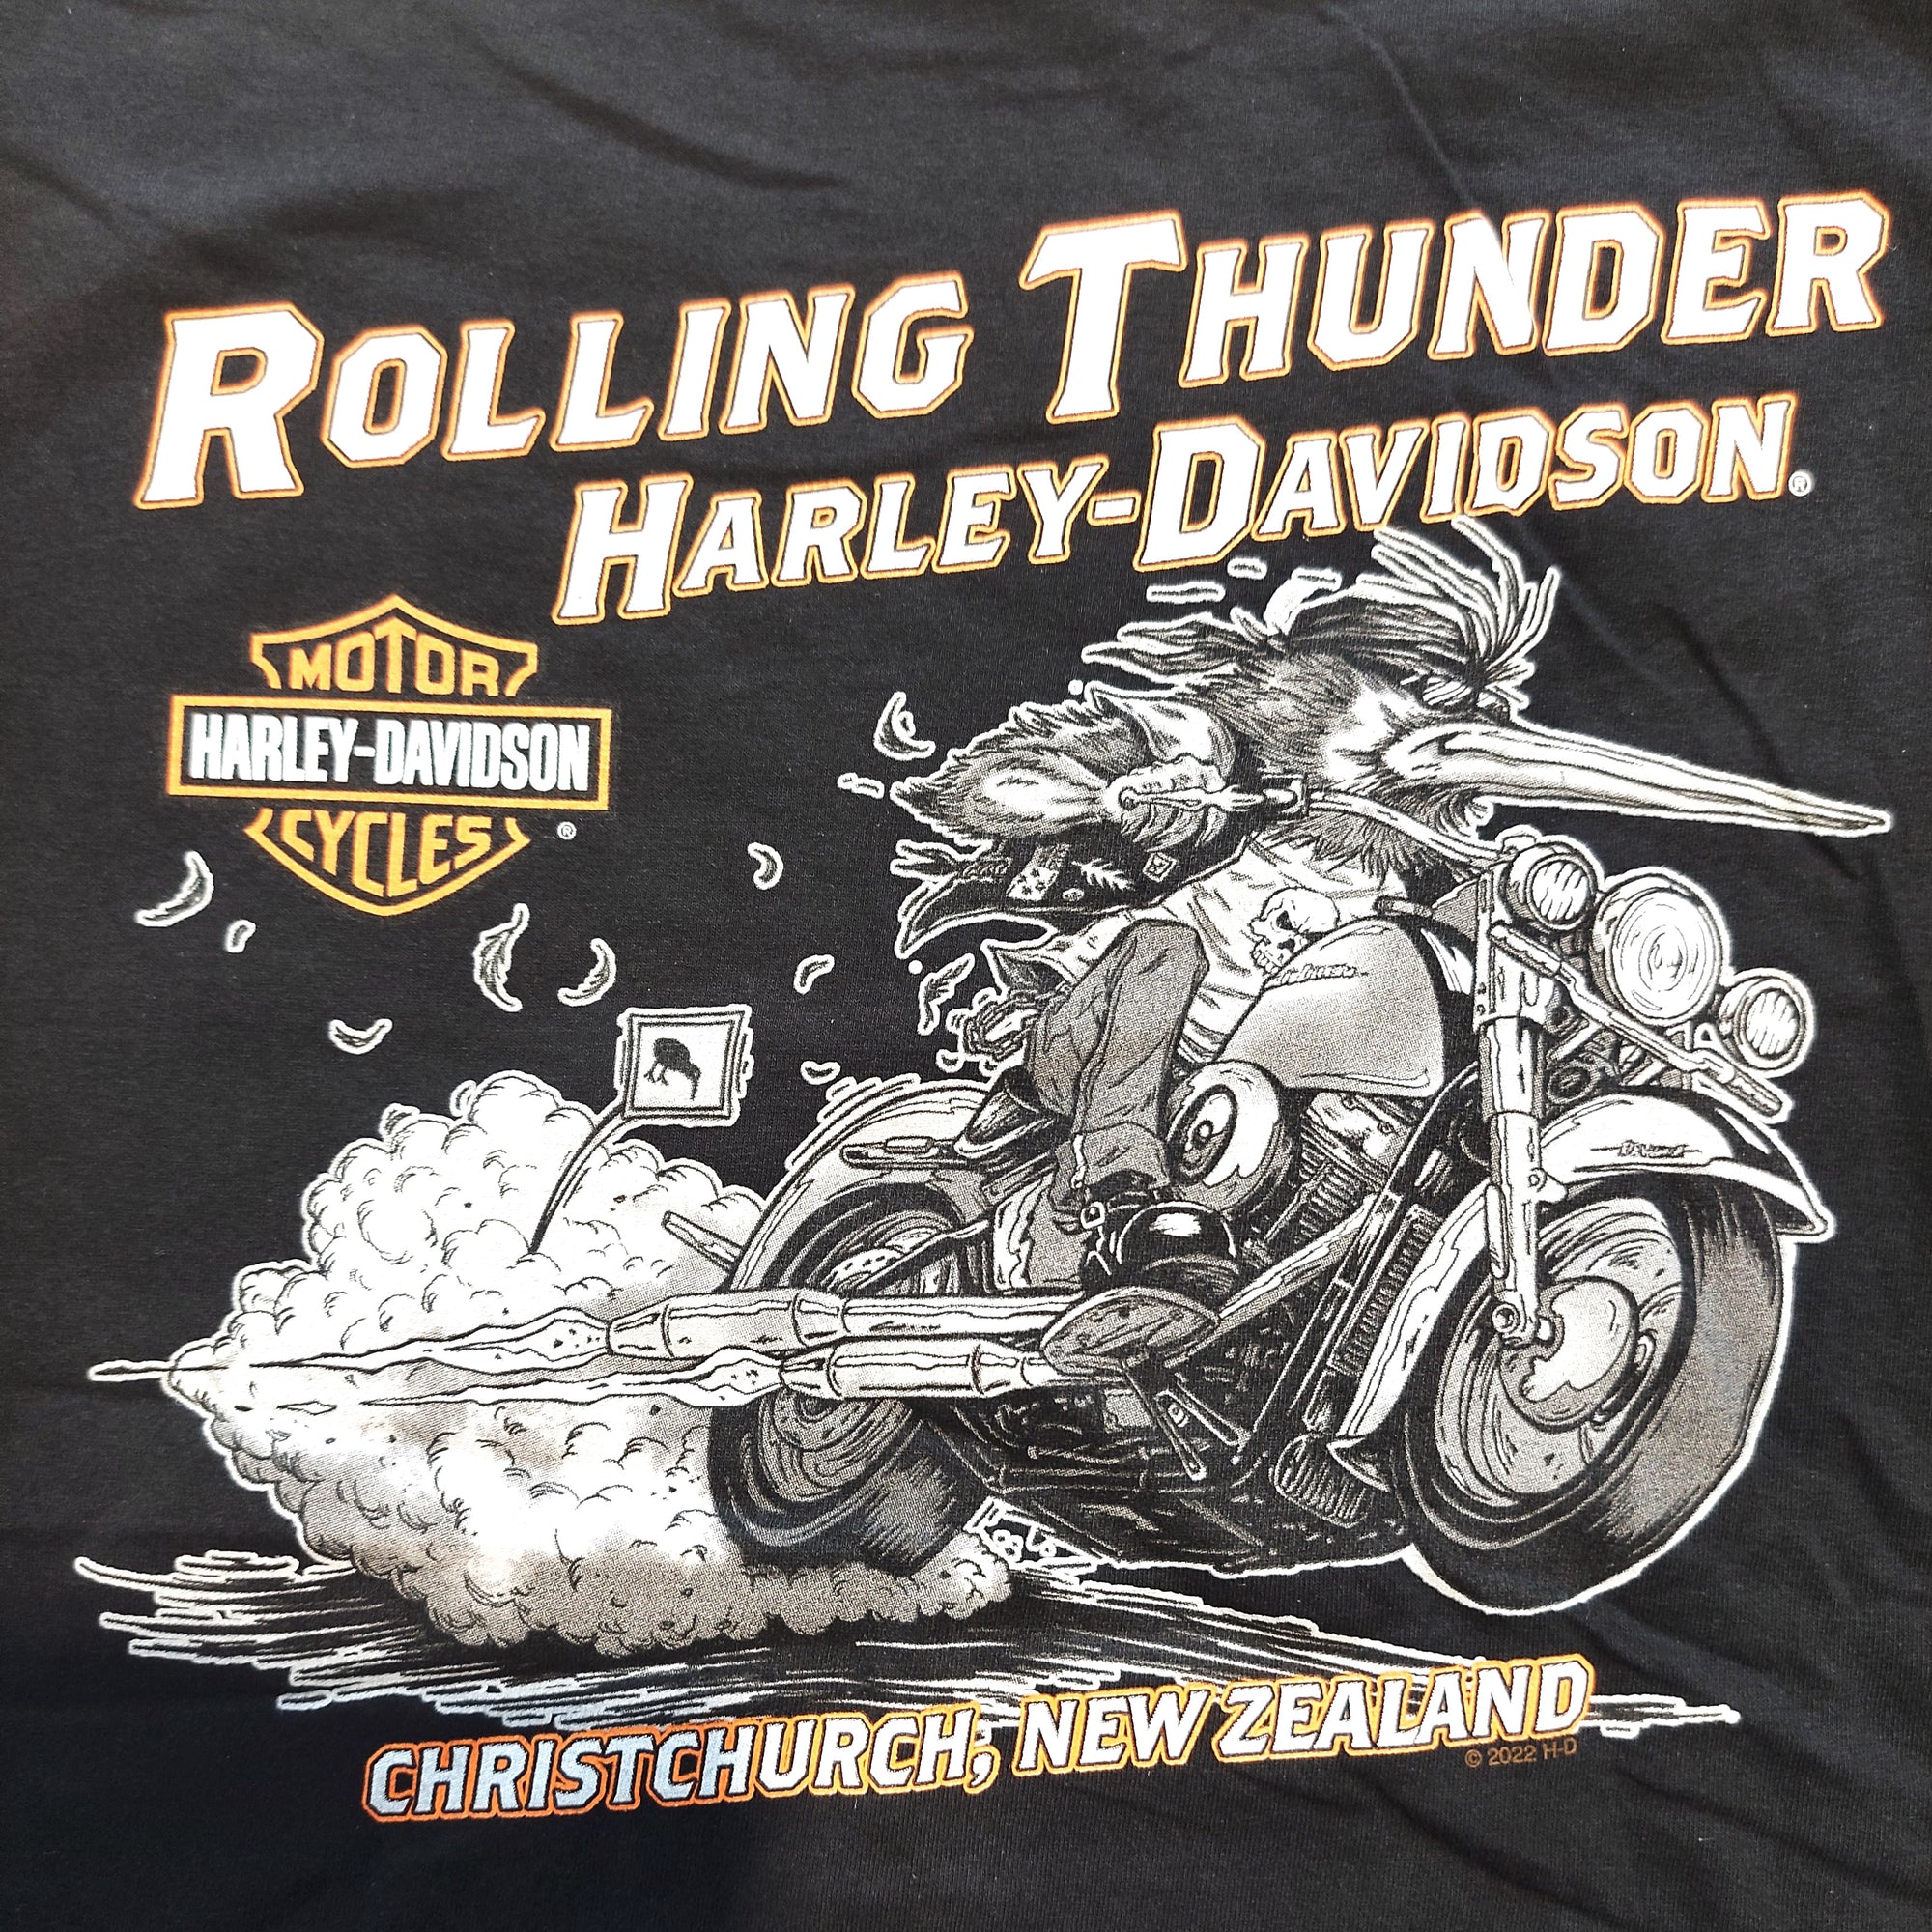 Rolling Thunder Harley-Davidson Kiwi Dealer Tee-Rolling Thunder Harley-Davidson